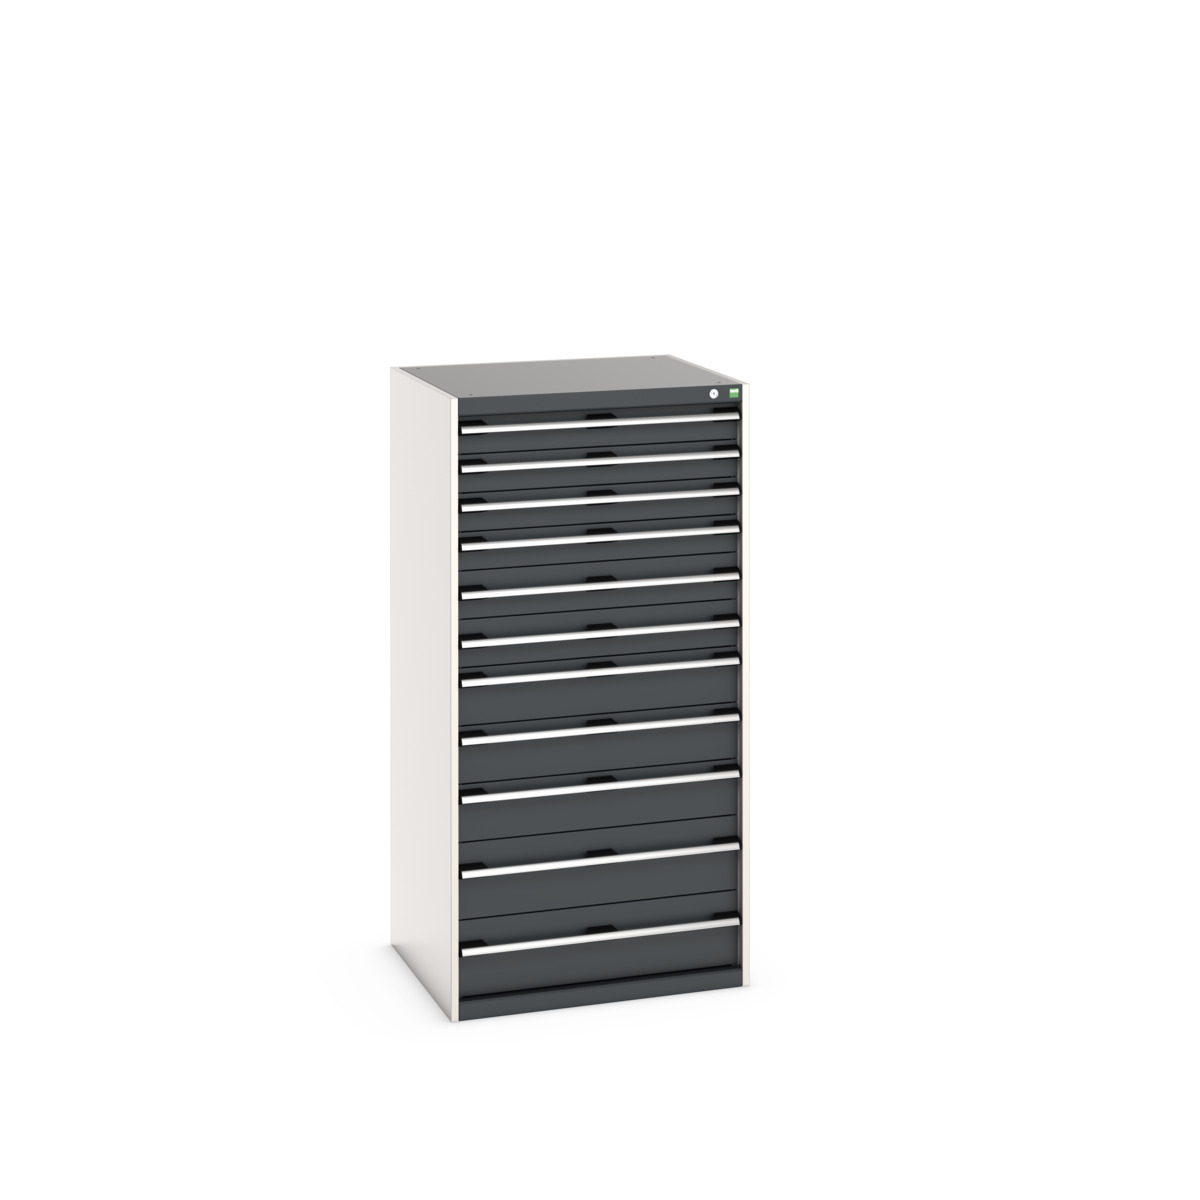 40028041. - cubio drawer cabinet 